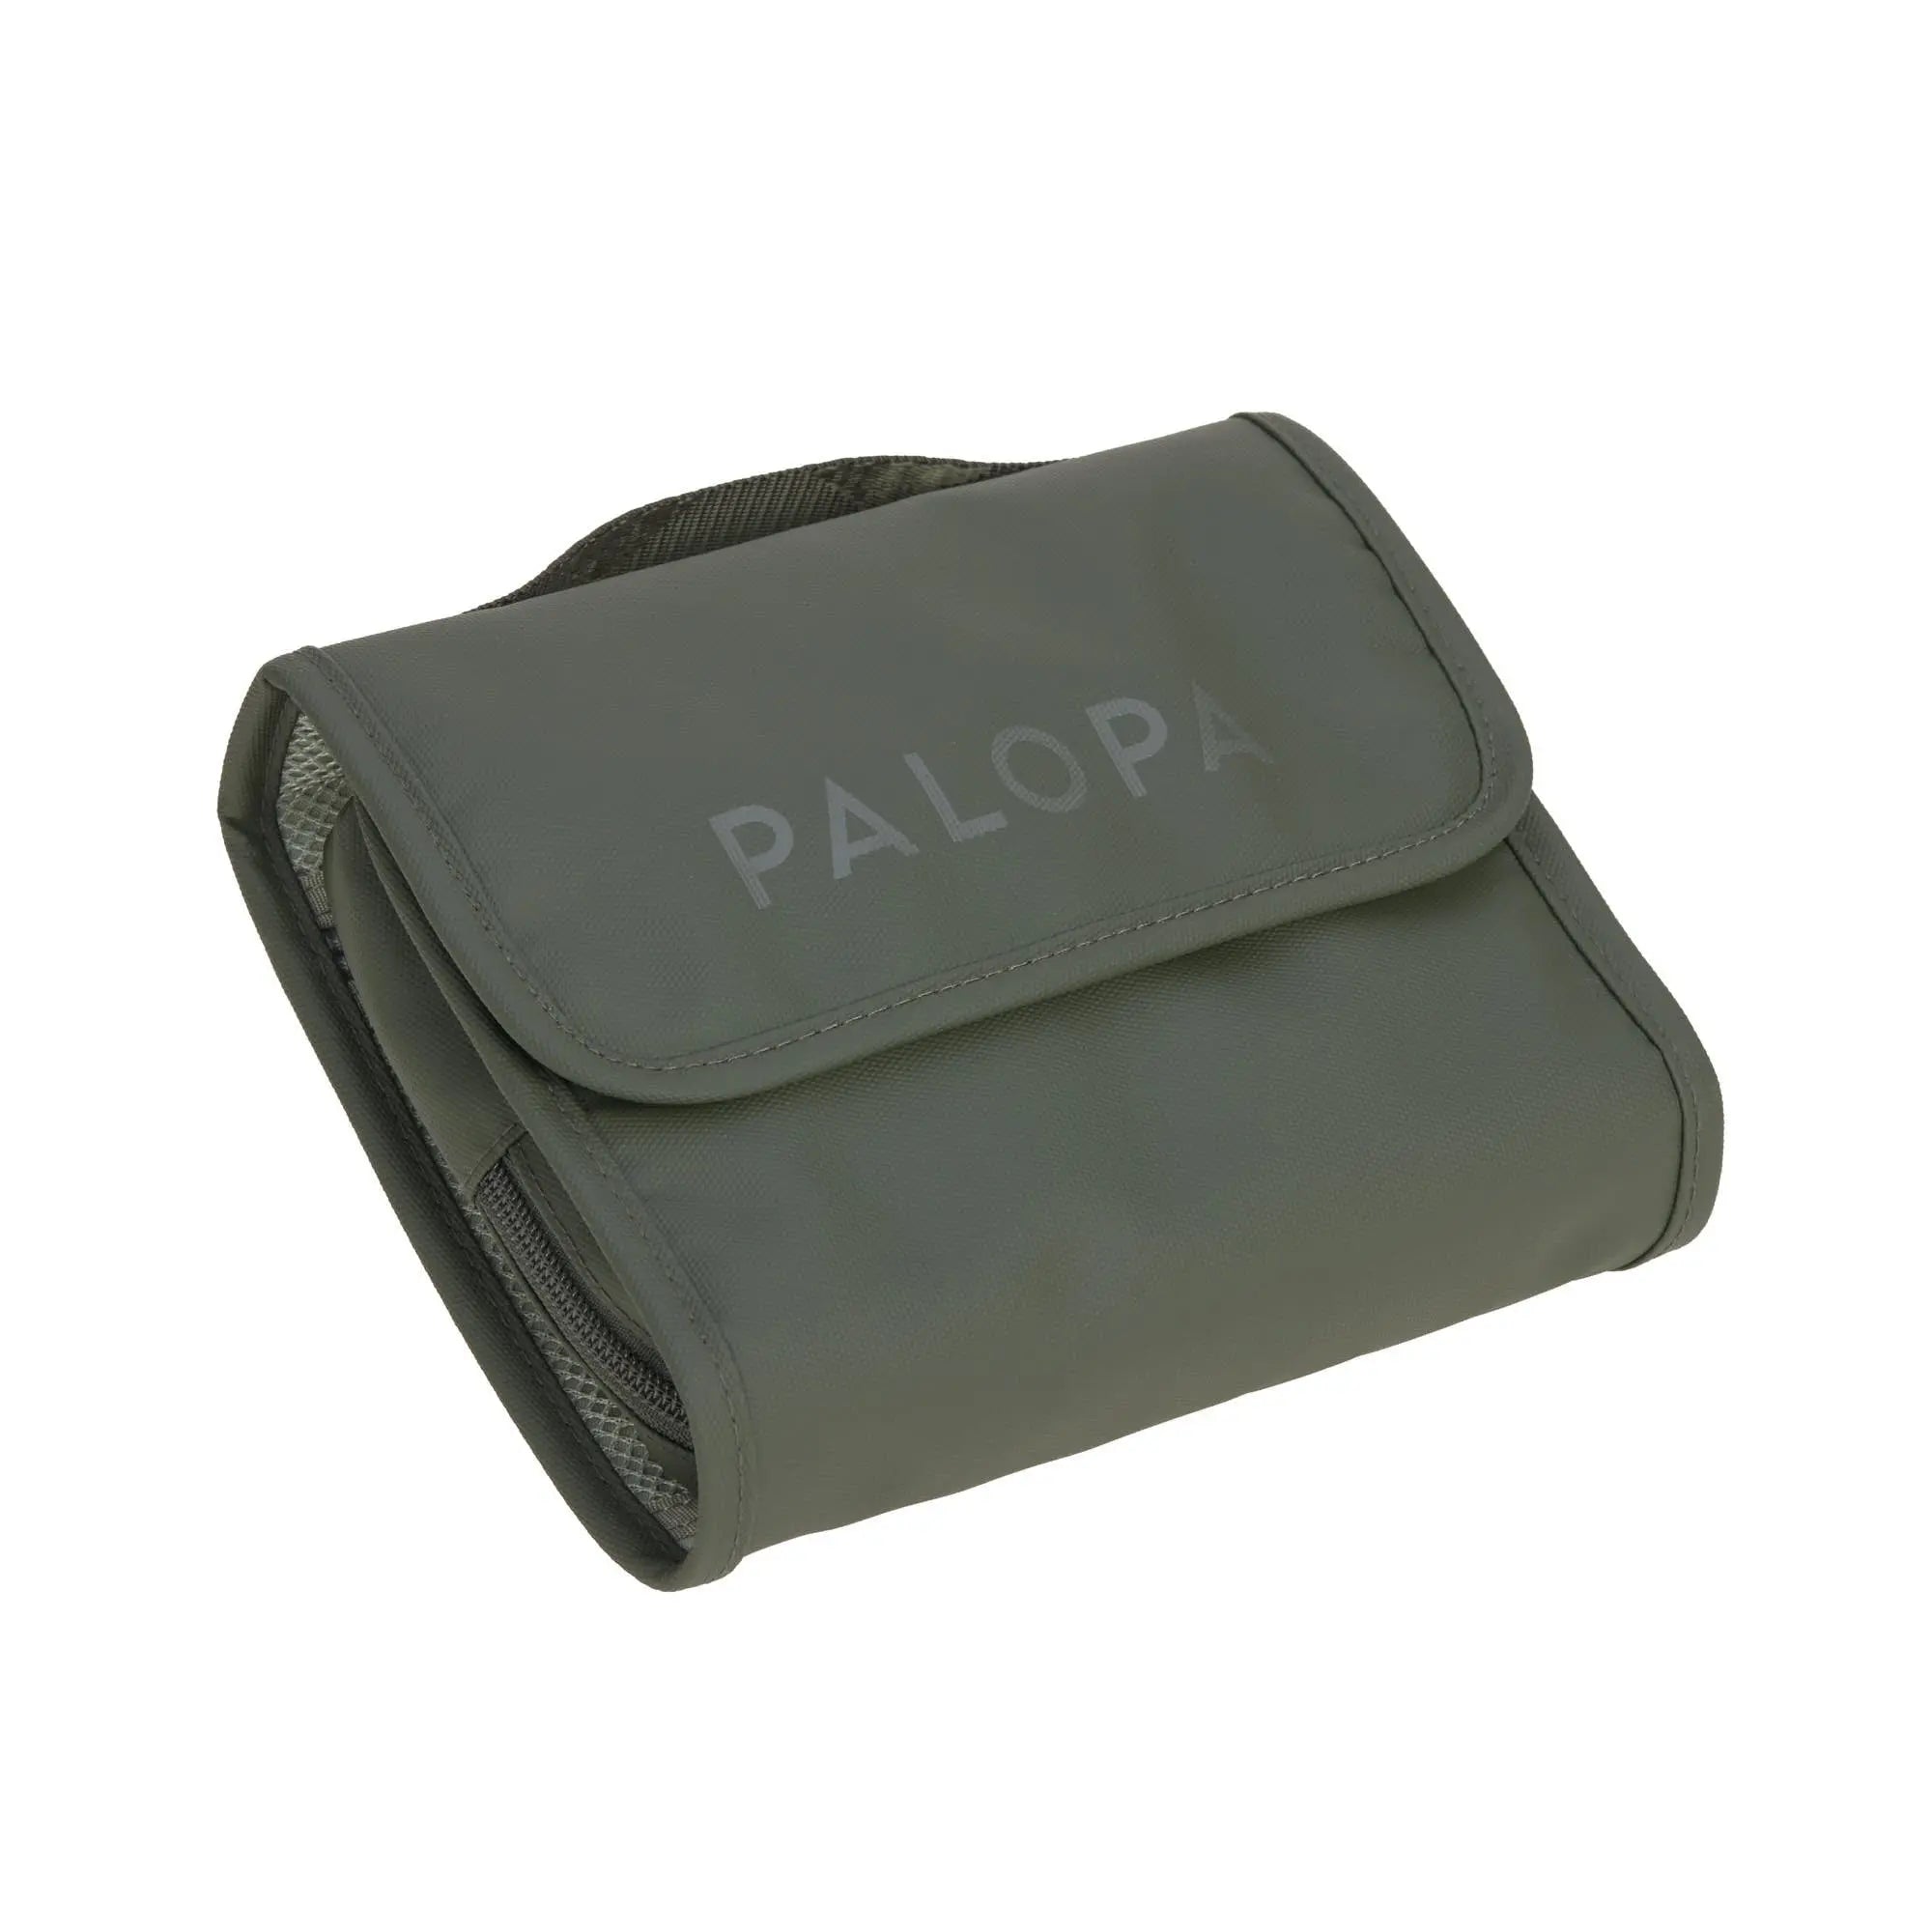 First Aid Kit Bano dark olive - PALOPA